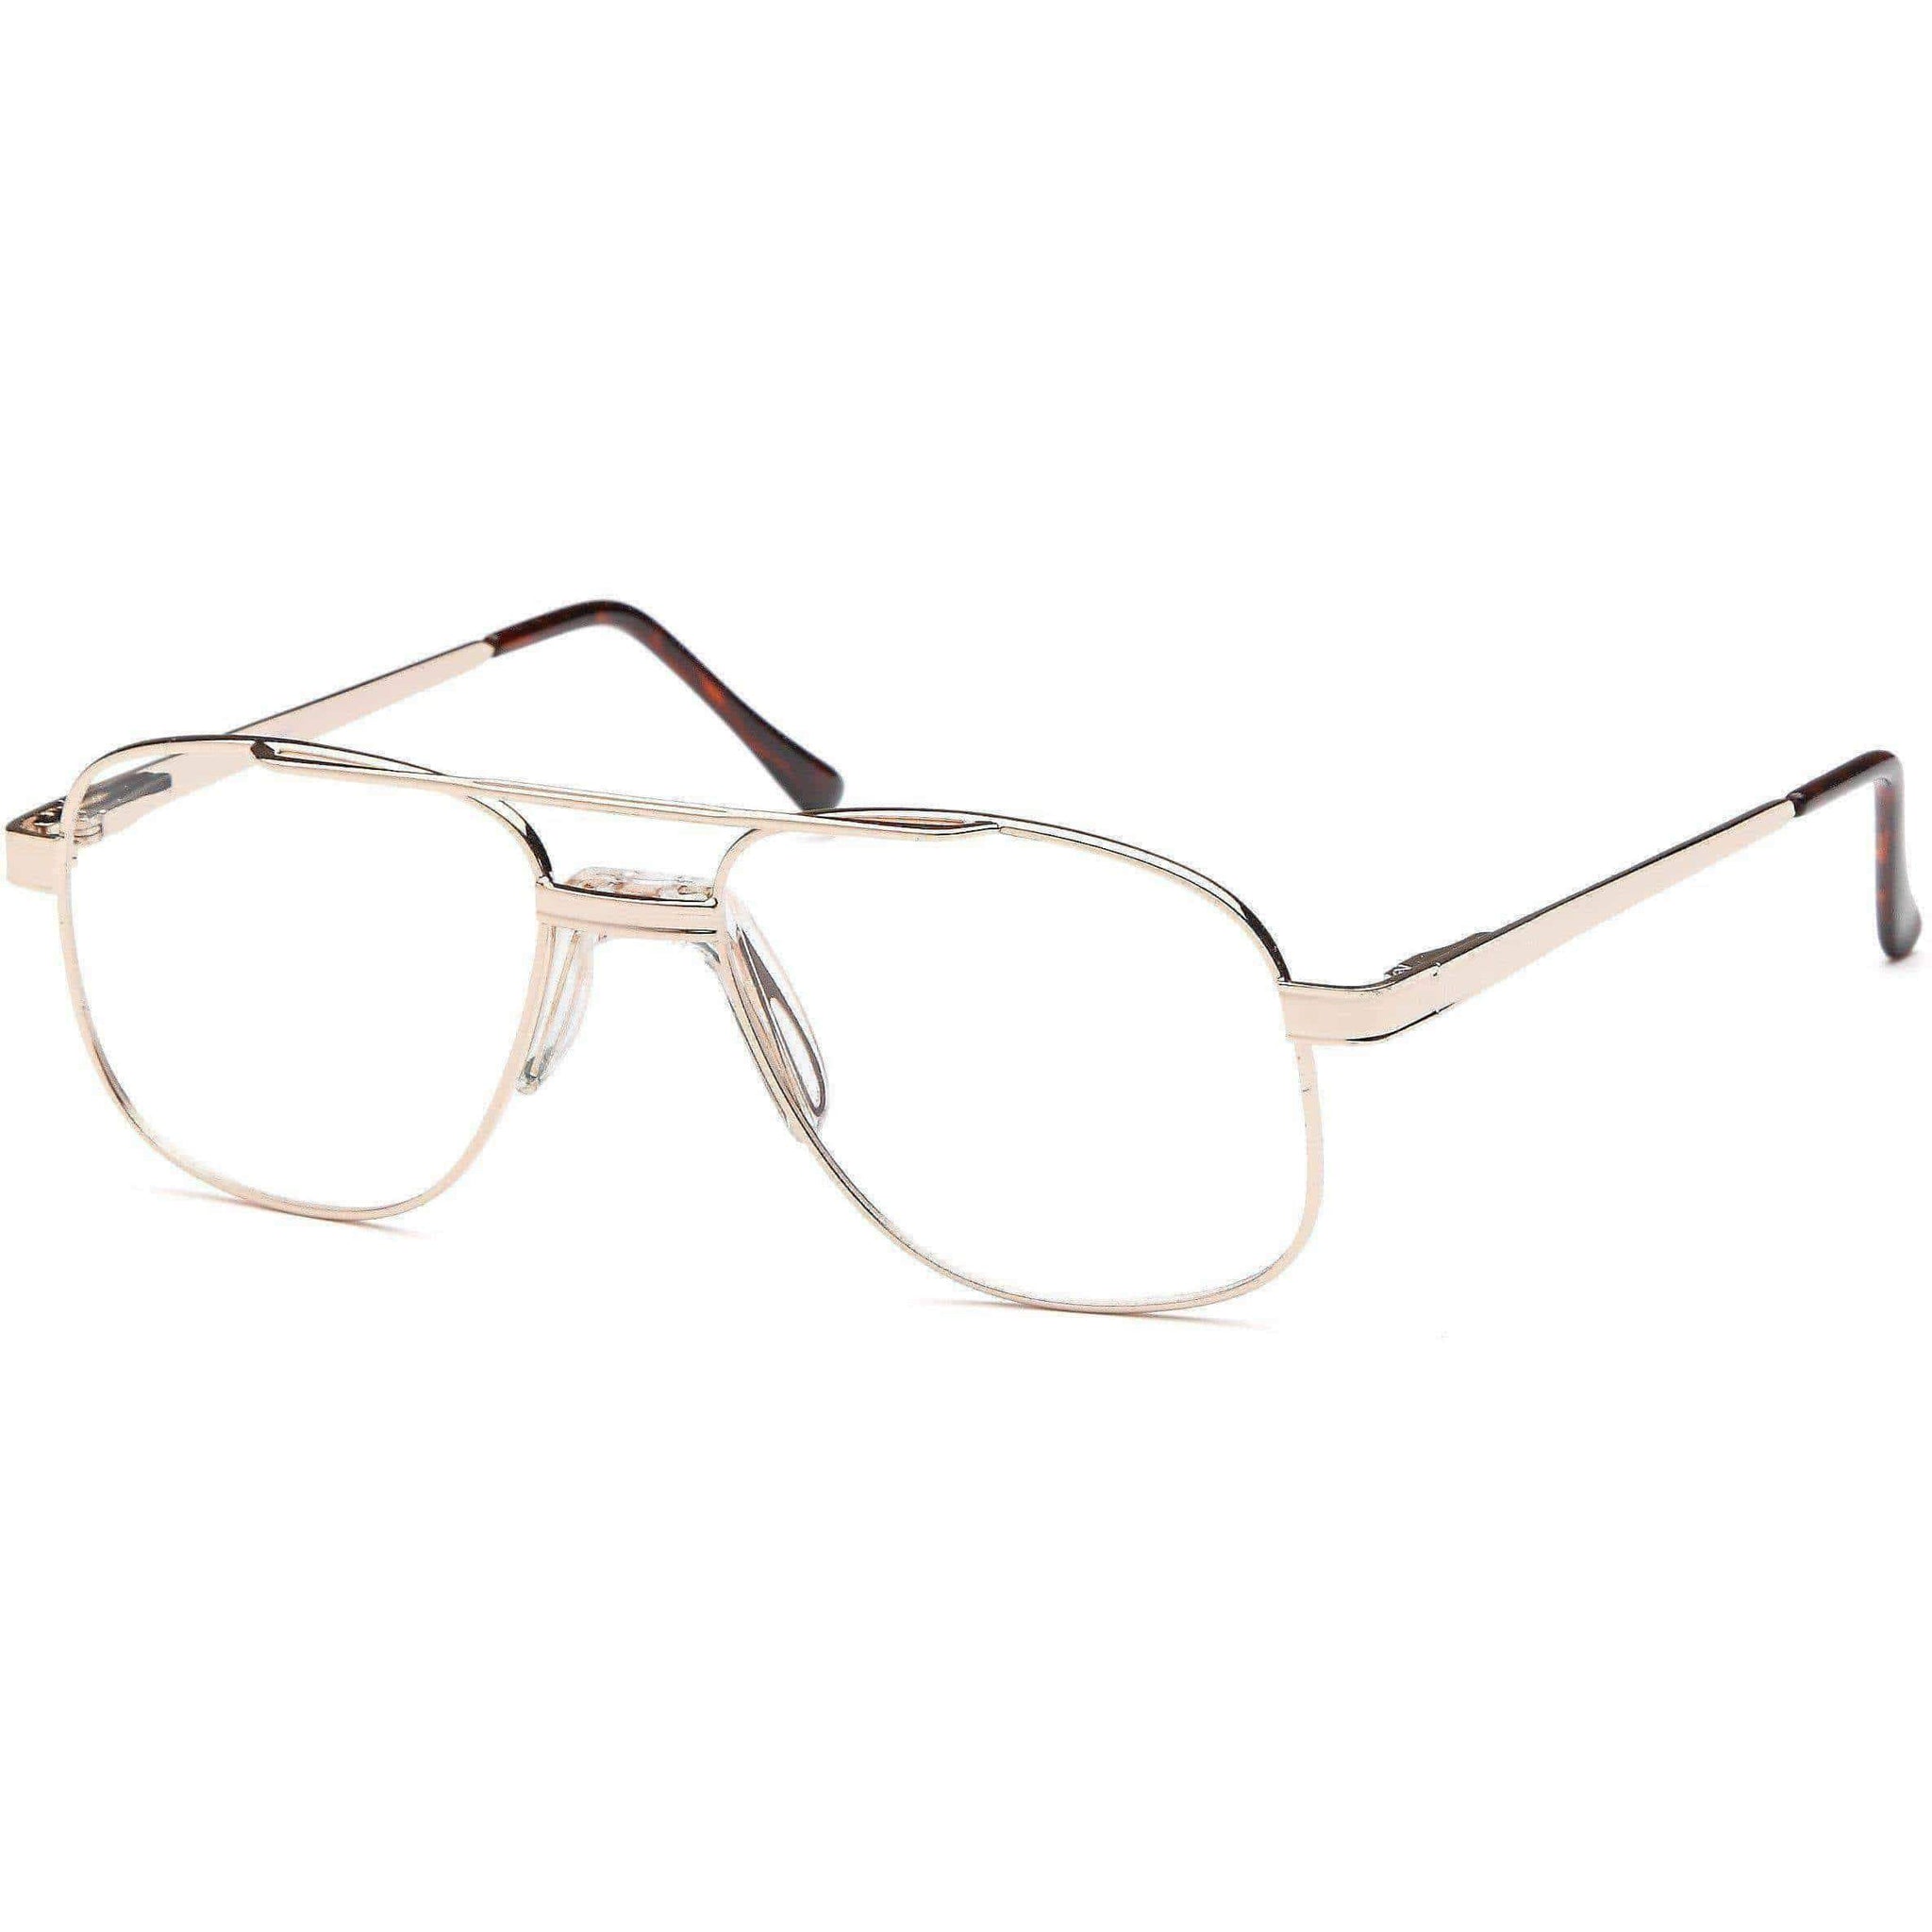 Gold Frame Glasses Sunglasses, Metal Prescription Glasses